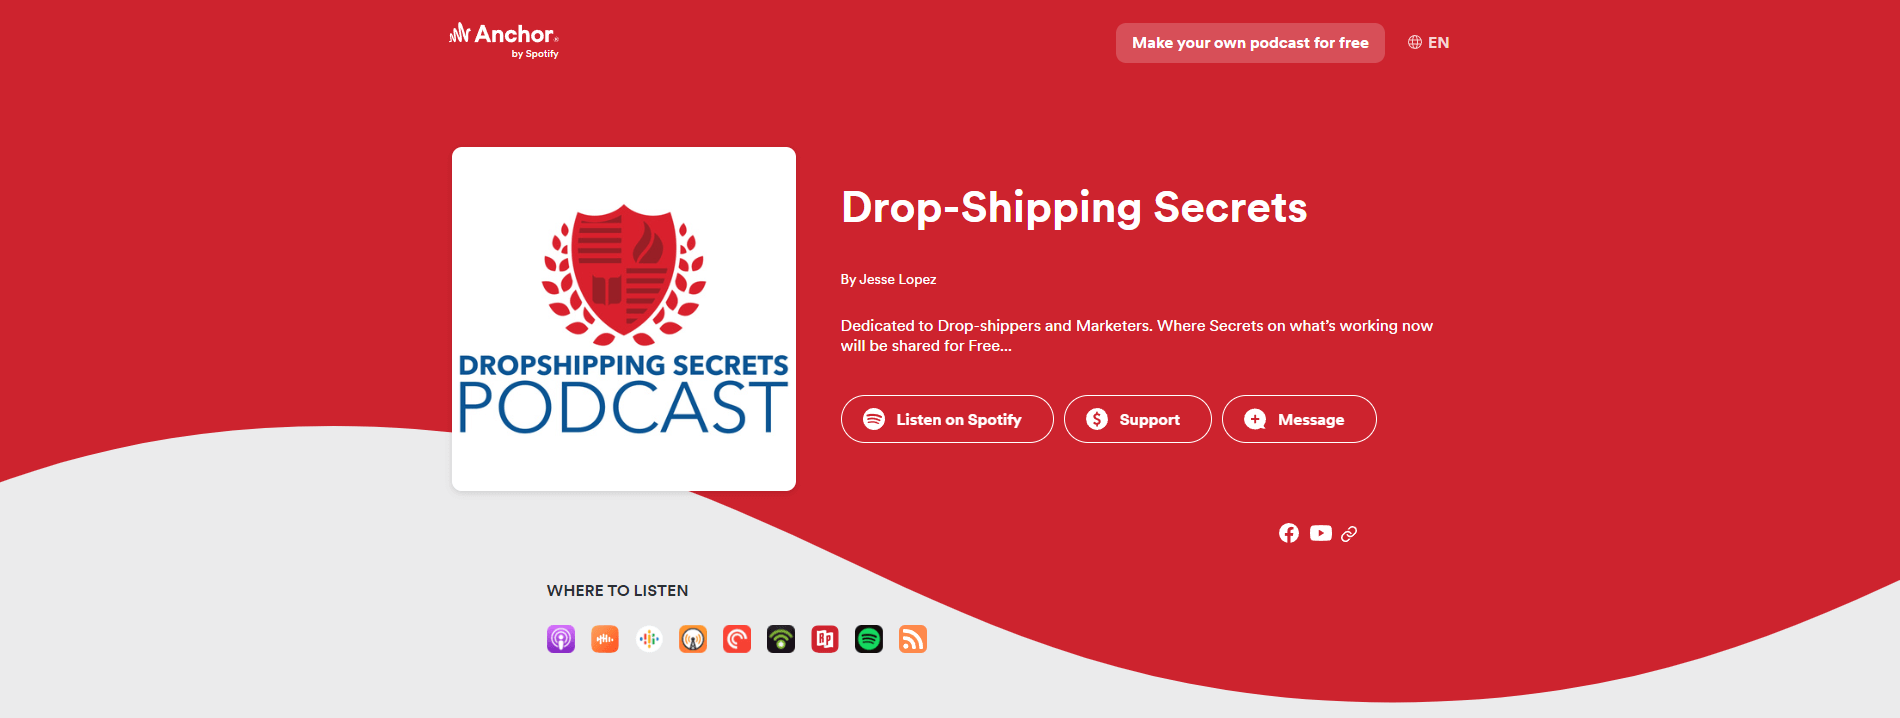 Drop-Shipping Secrets